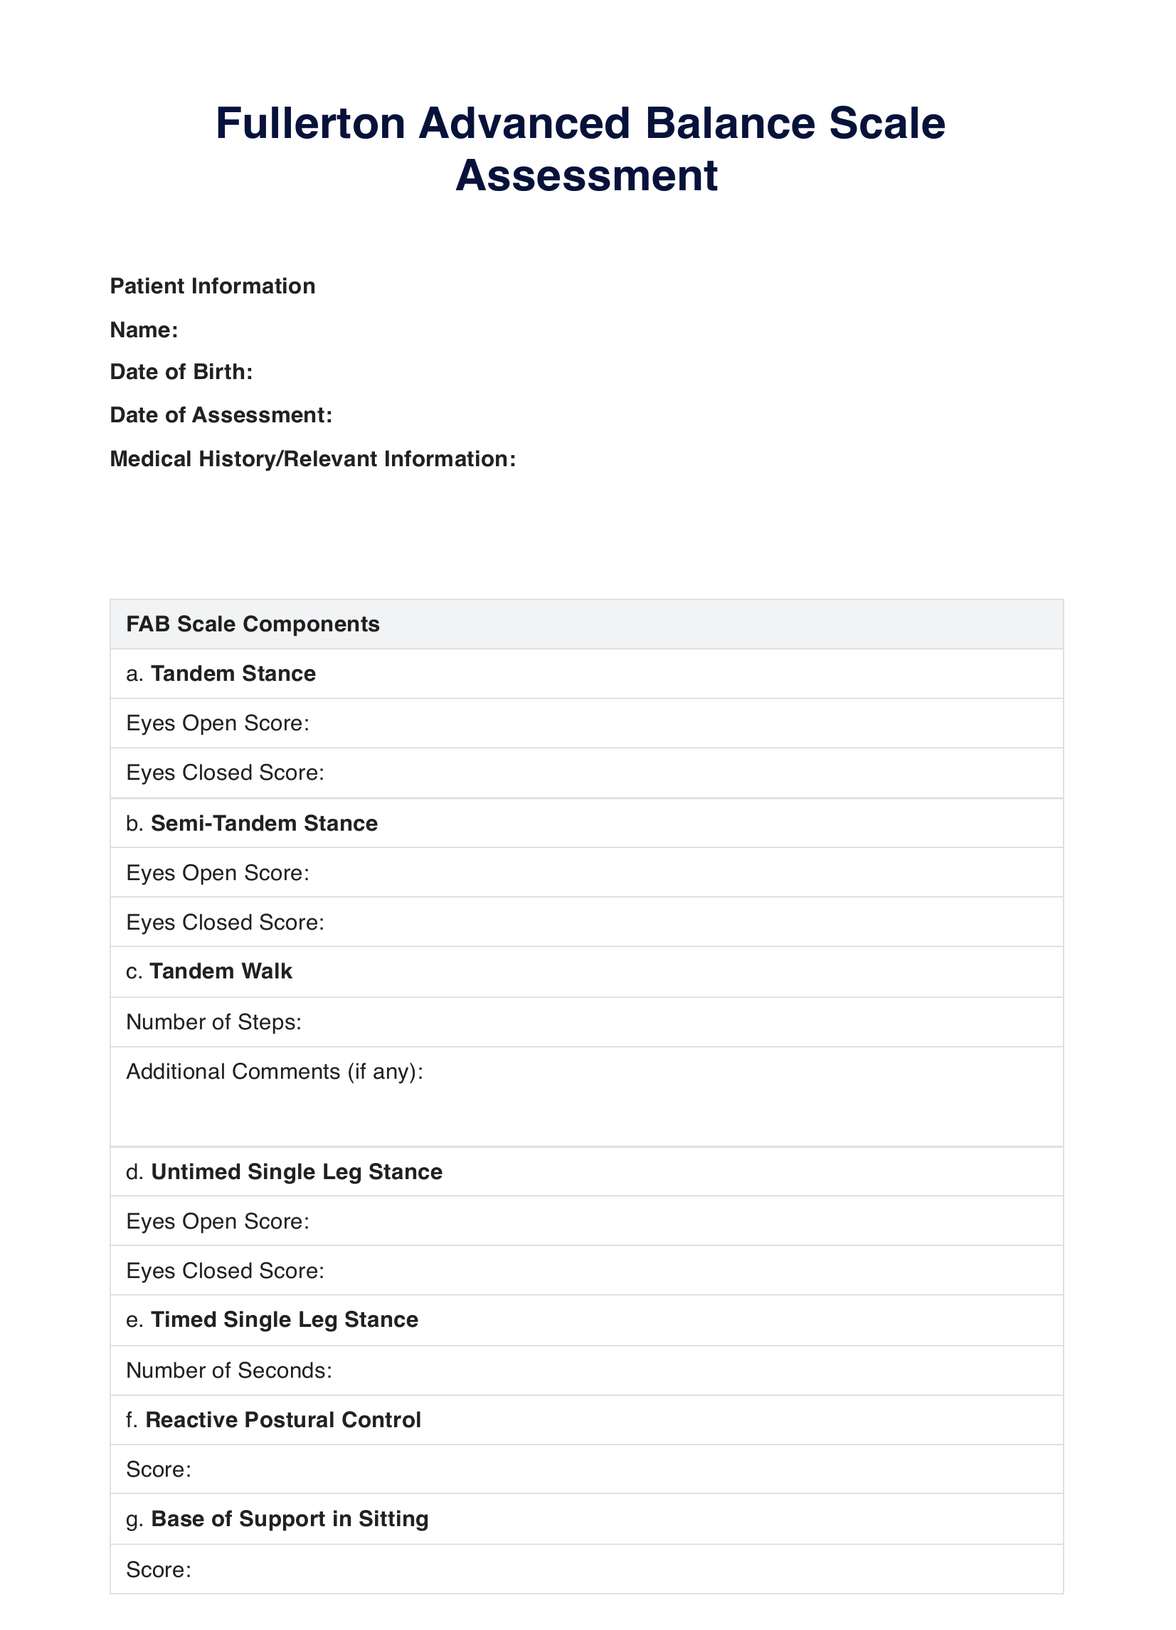 Fullerton Advanced Balance (FAB) Scale PDF Example